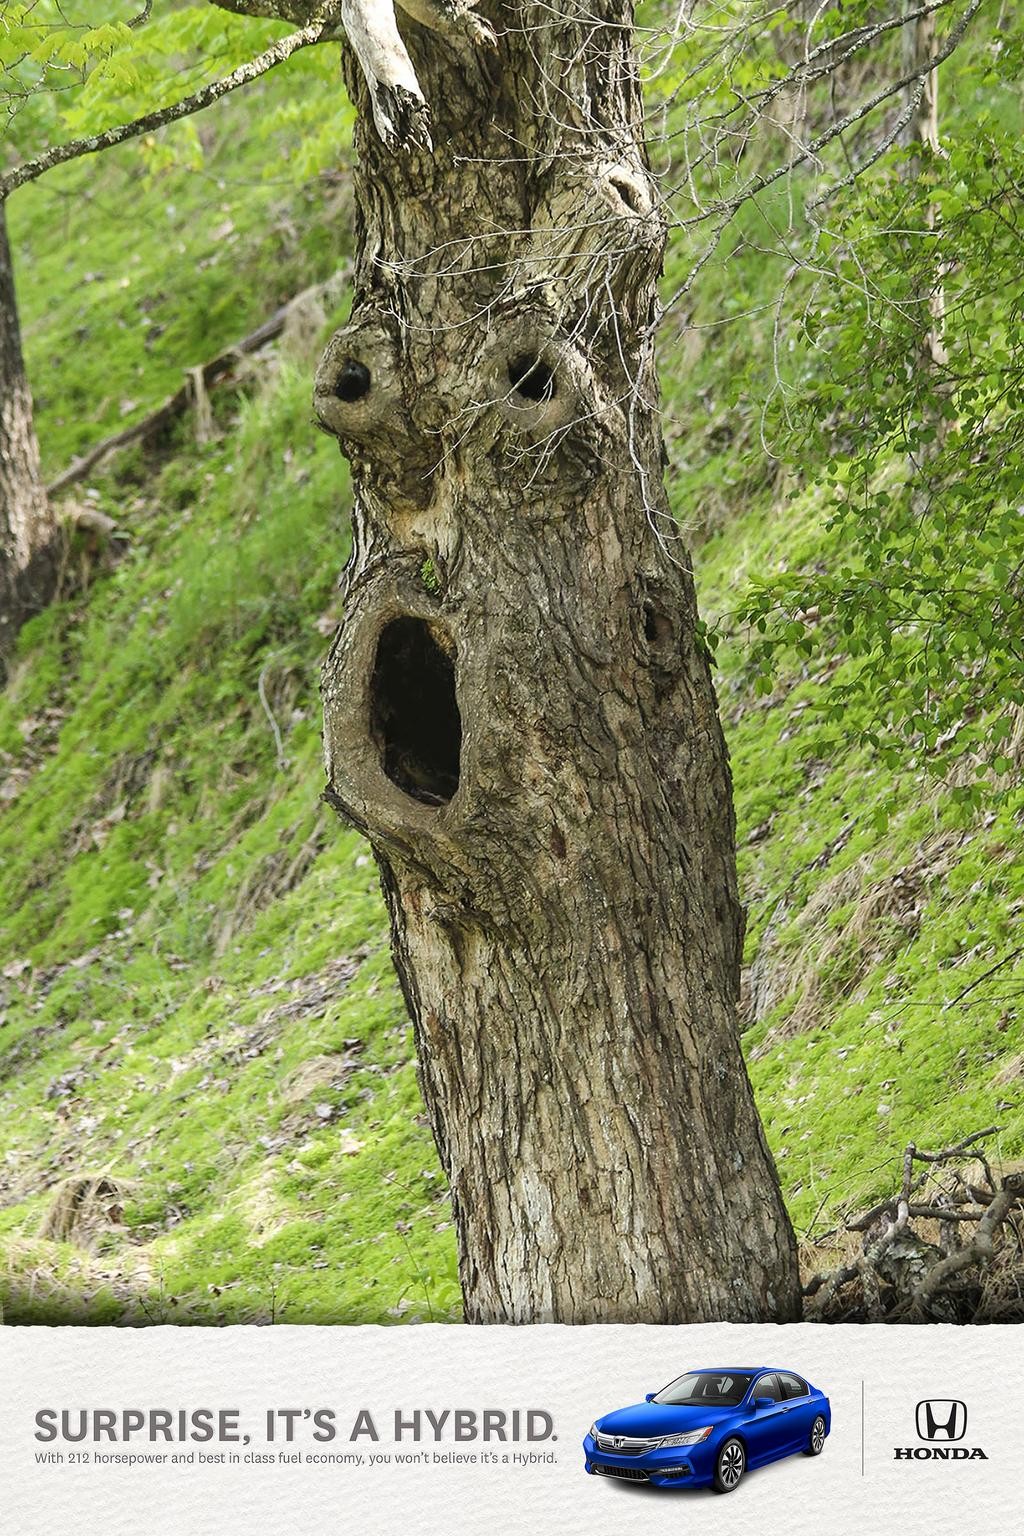 Surprise, it's a hybrid - Surprised Tree